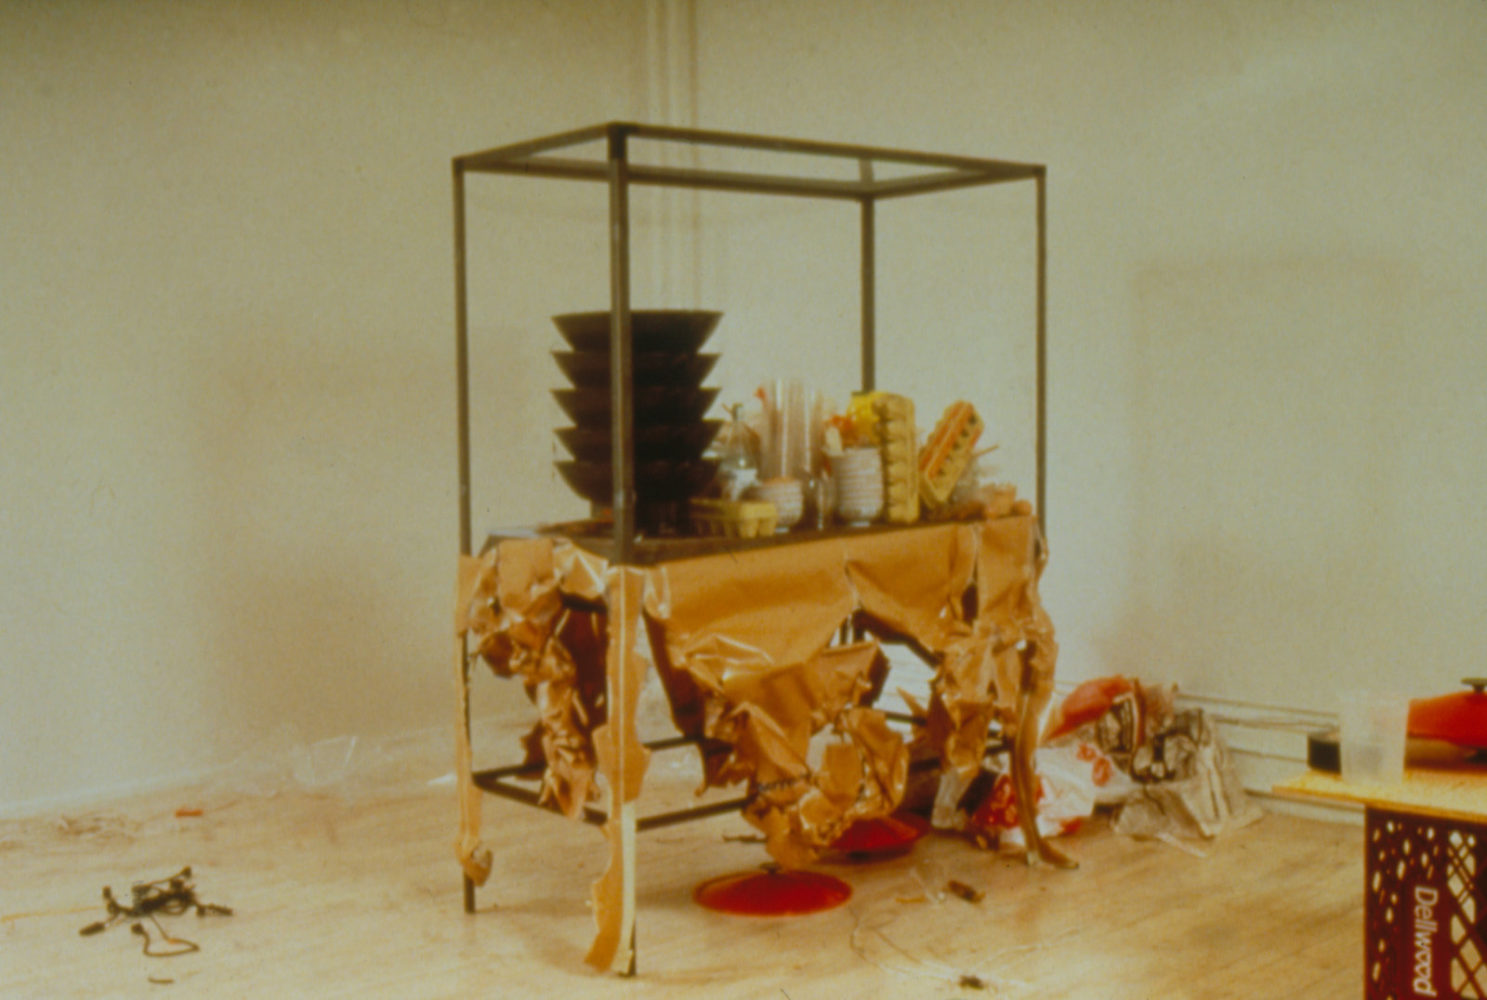 Installation view, Rirkrit Tiravanija, "untitled (pad thai)," 1990, courtesy of Paula Allen Gallery, New York and Rirkrit Tiravanija.